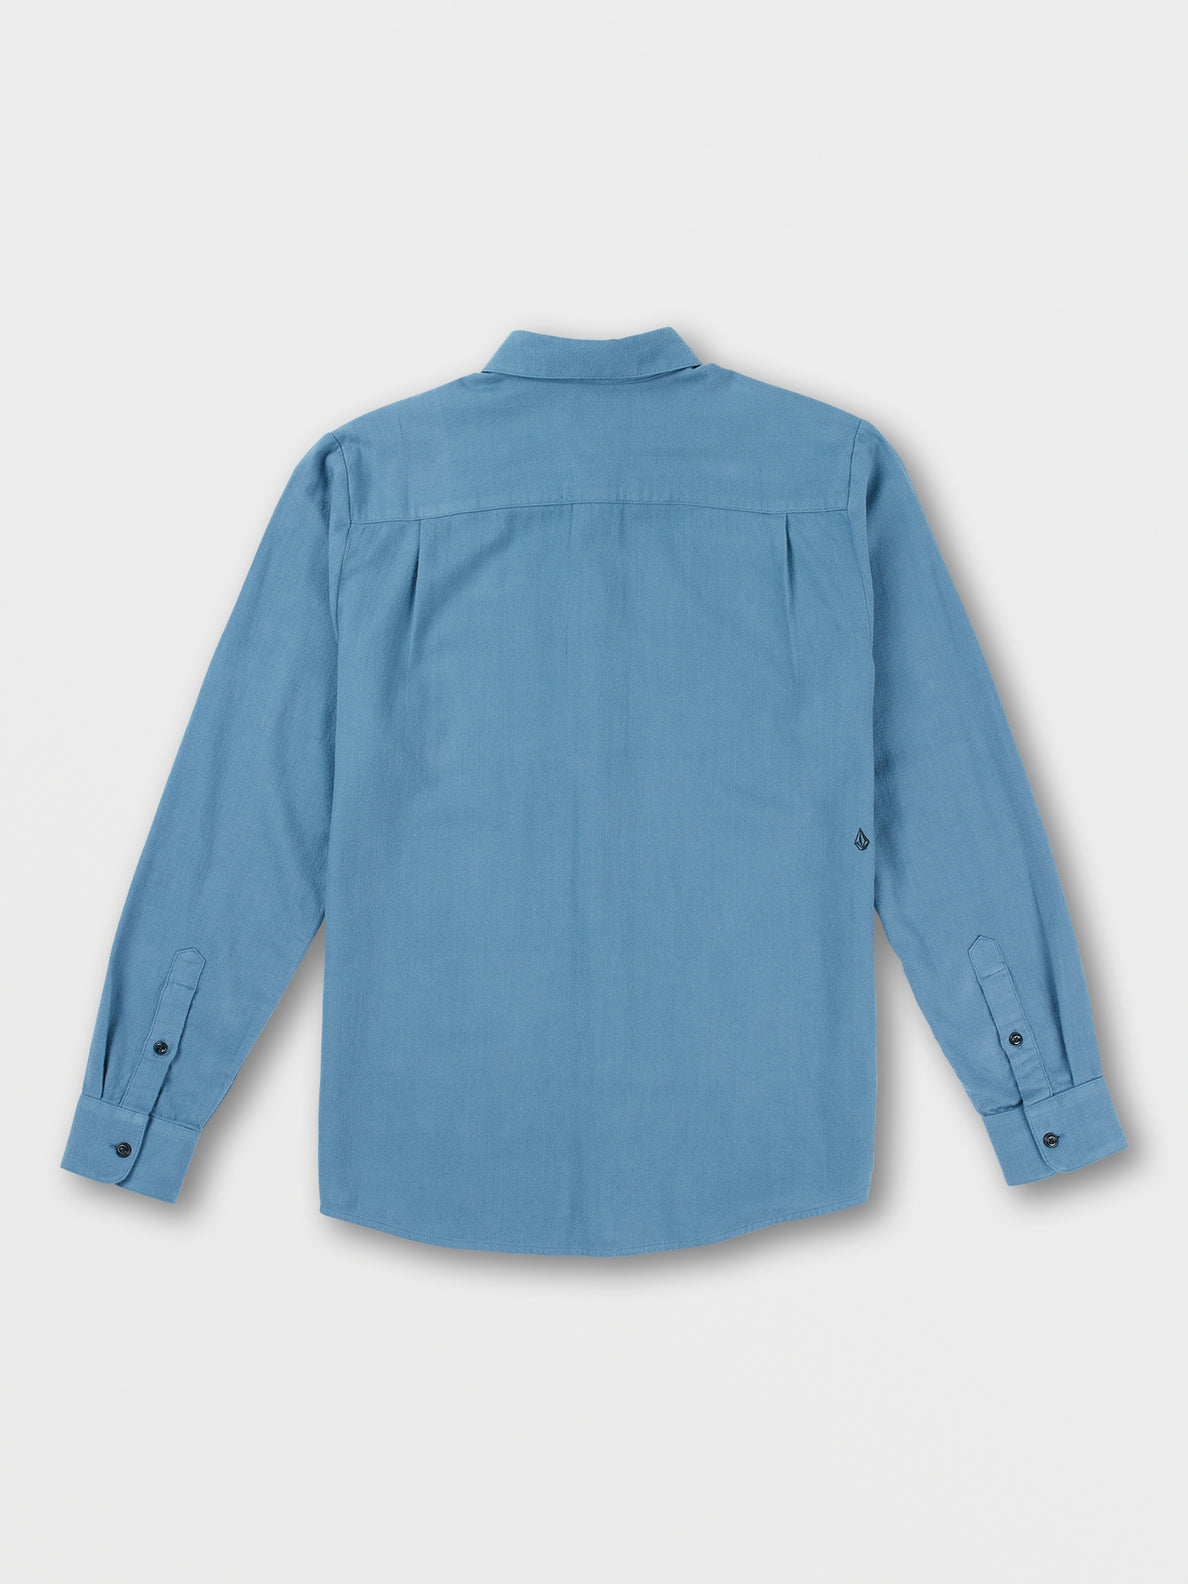 Caden Solid Long Sleeve Shirt - Slate Blue (A0532204_SLB) [B]